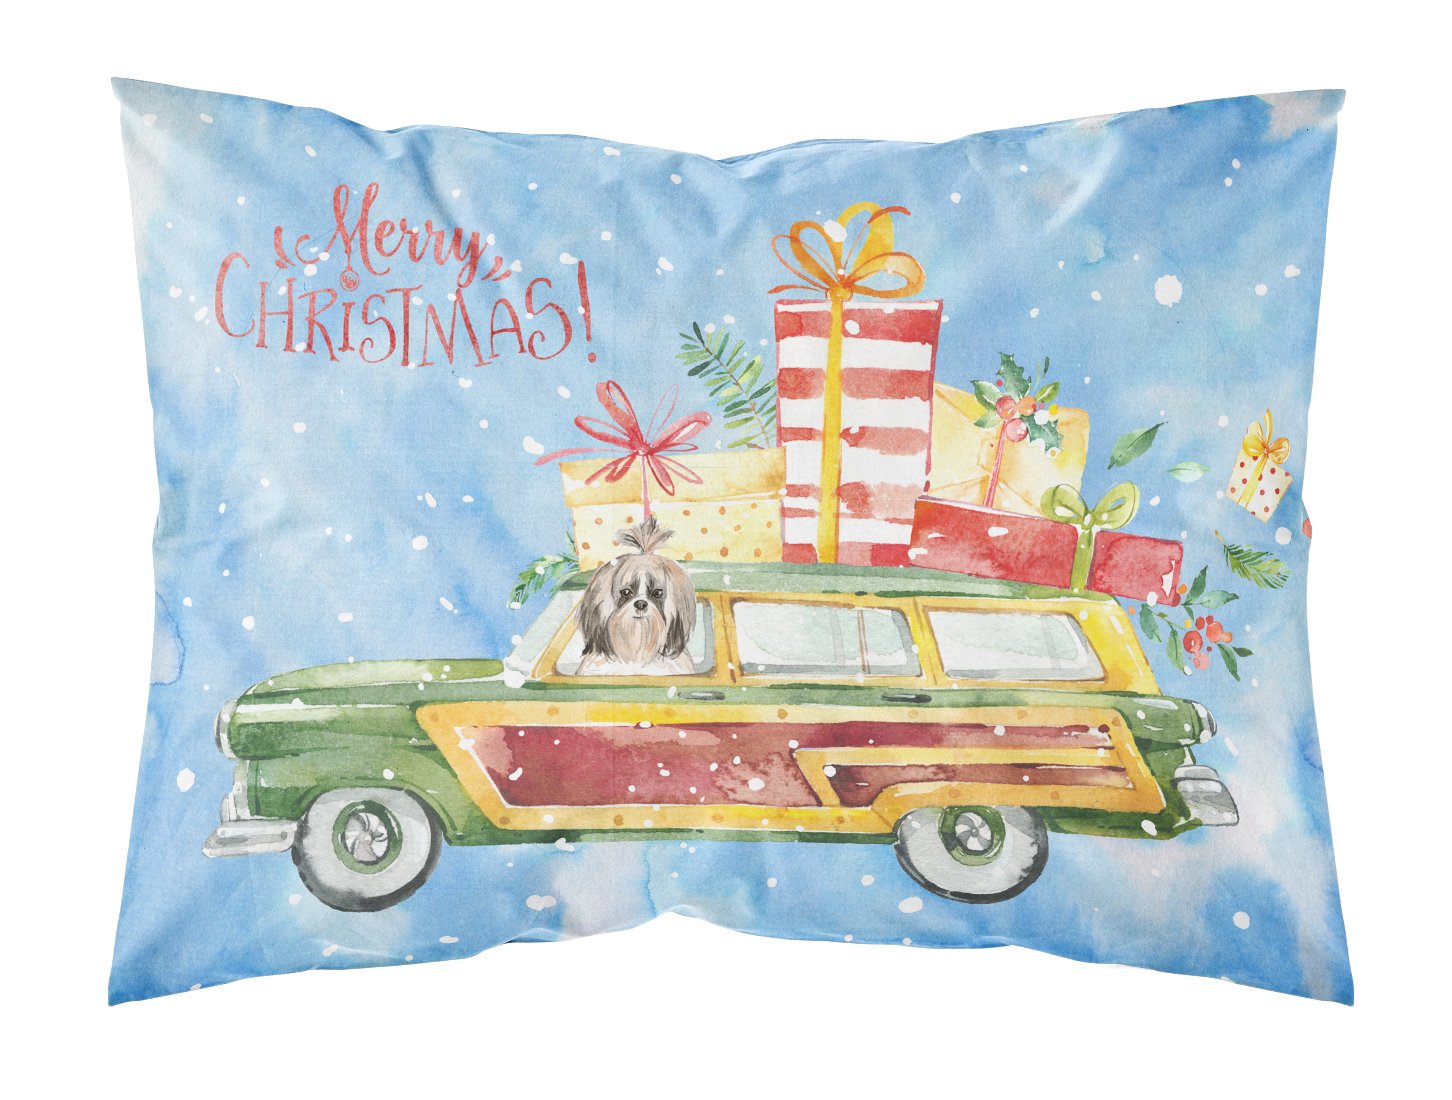 Merry Christmas Shih Tzu Fabric Standard Pillowcase CK2422PILLOWCASE by Caroline's Treasures